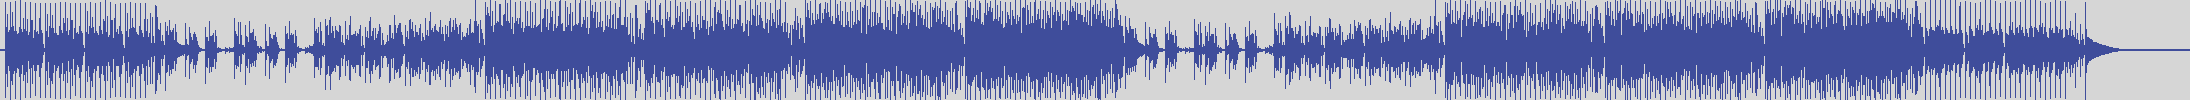 nf_boyz_records [NFY036] Saxomann - My Feeling Love [Sax O' Matic Mix] audio wave form